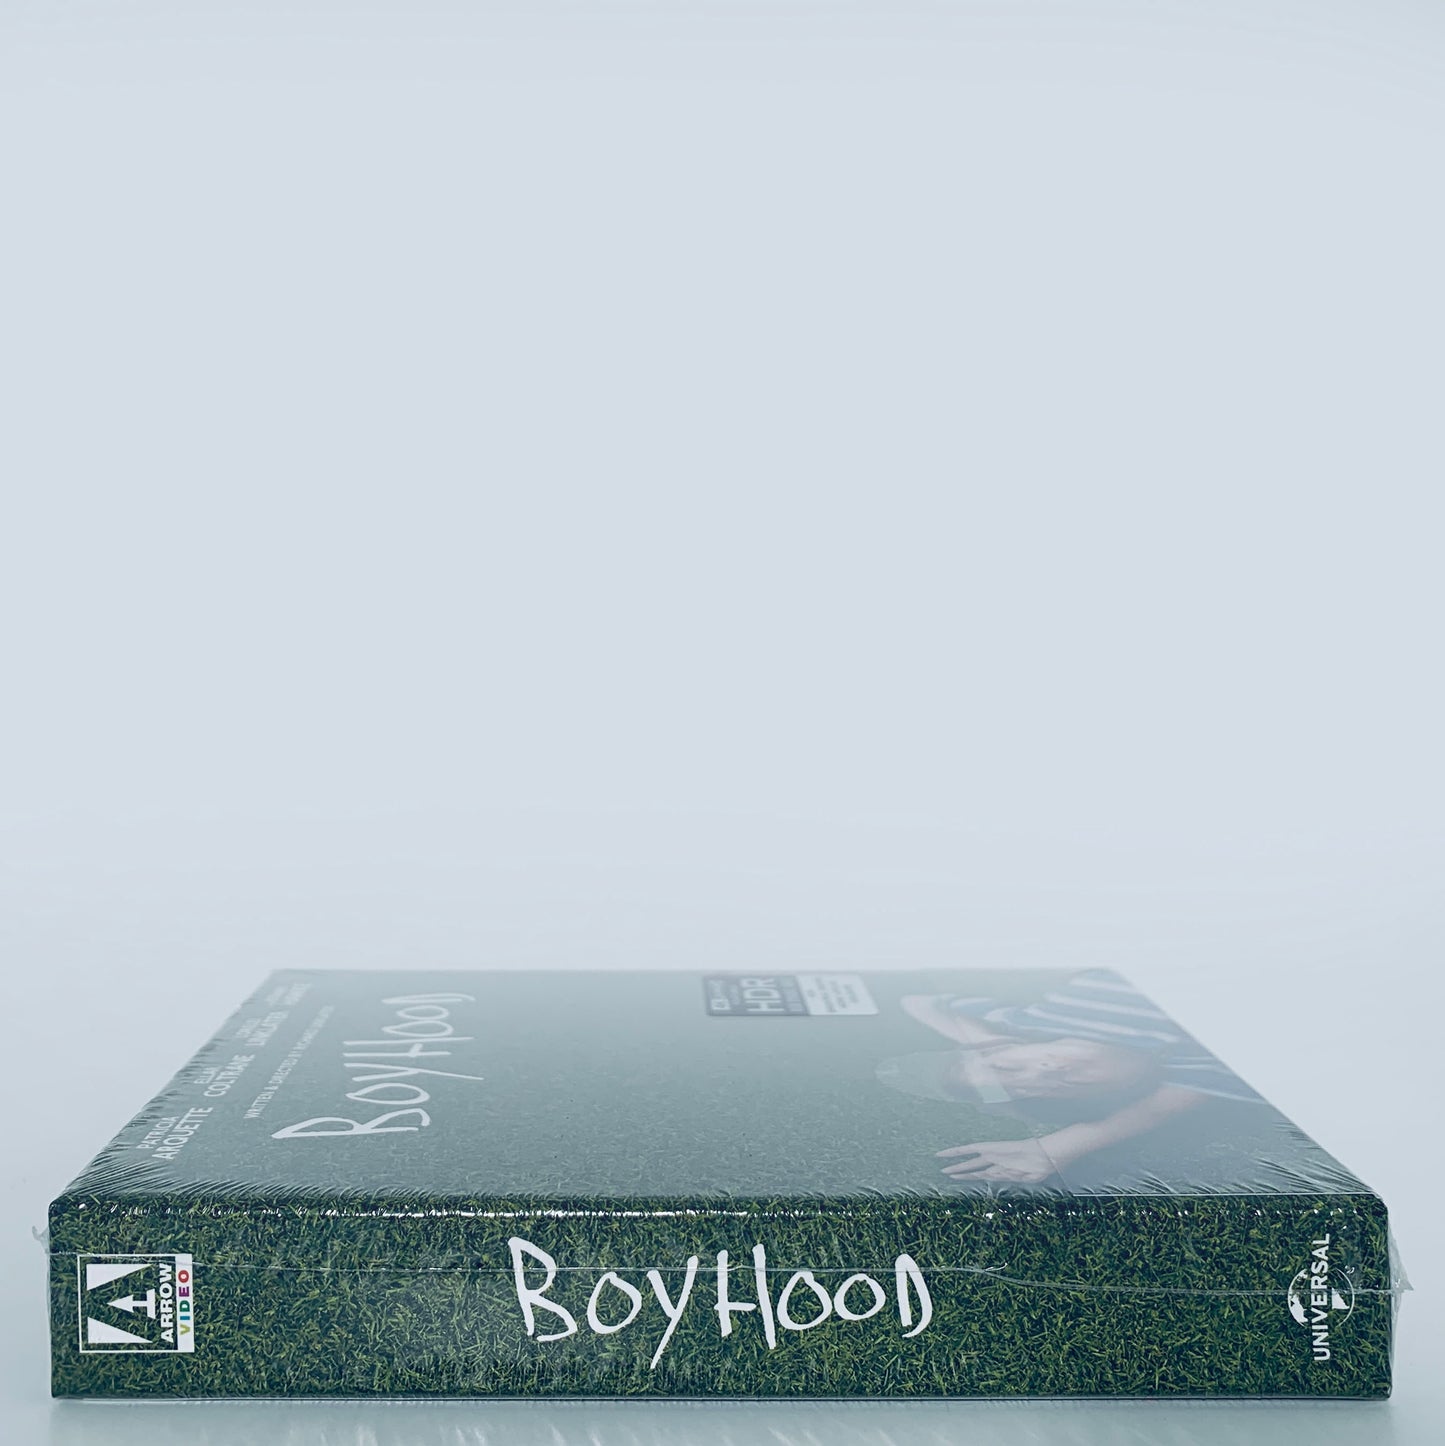 Boyhood Boy Hood Richard Linklater UHD 4K Arrow Films Ultra HD Blu-ray UK Ethan Hawke